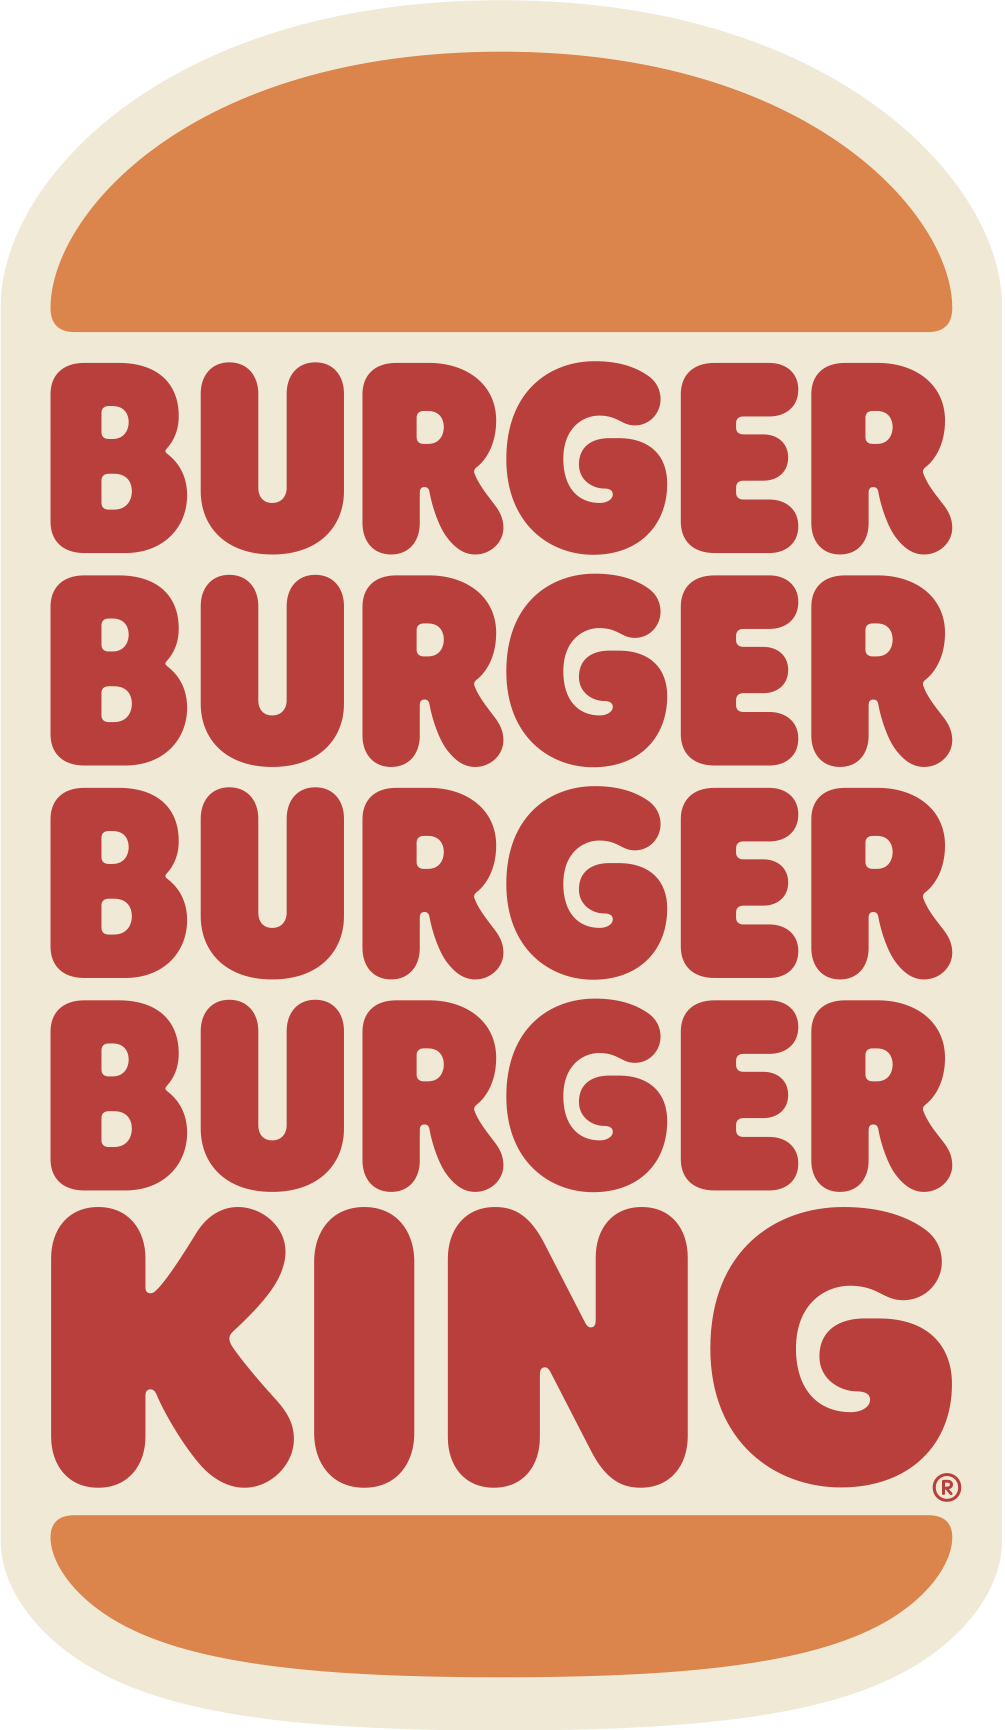 Burger King logo - int